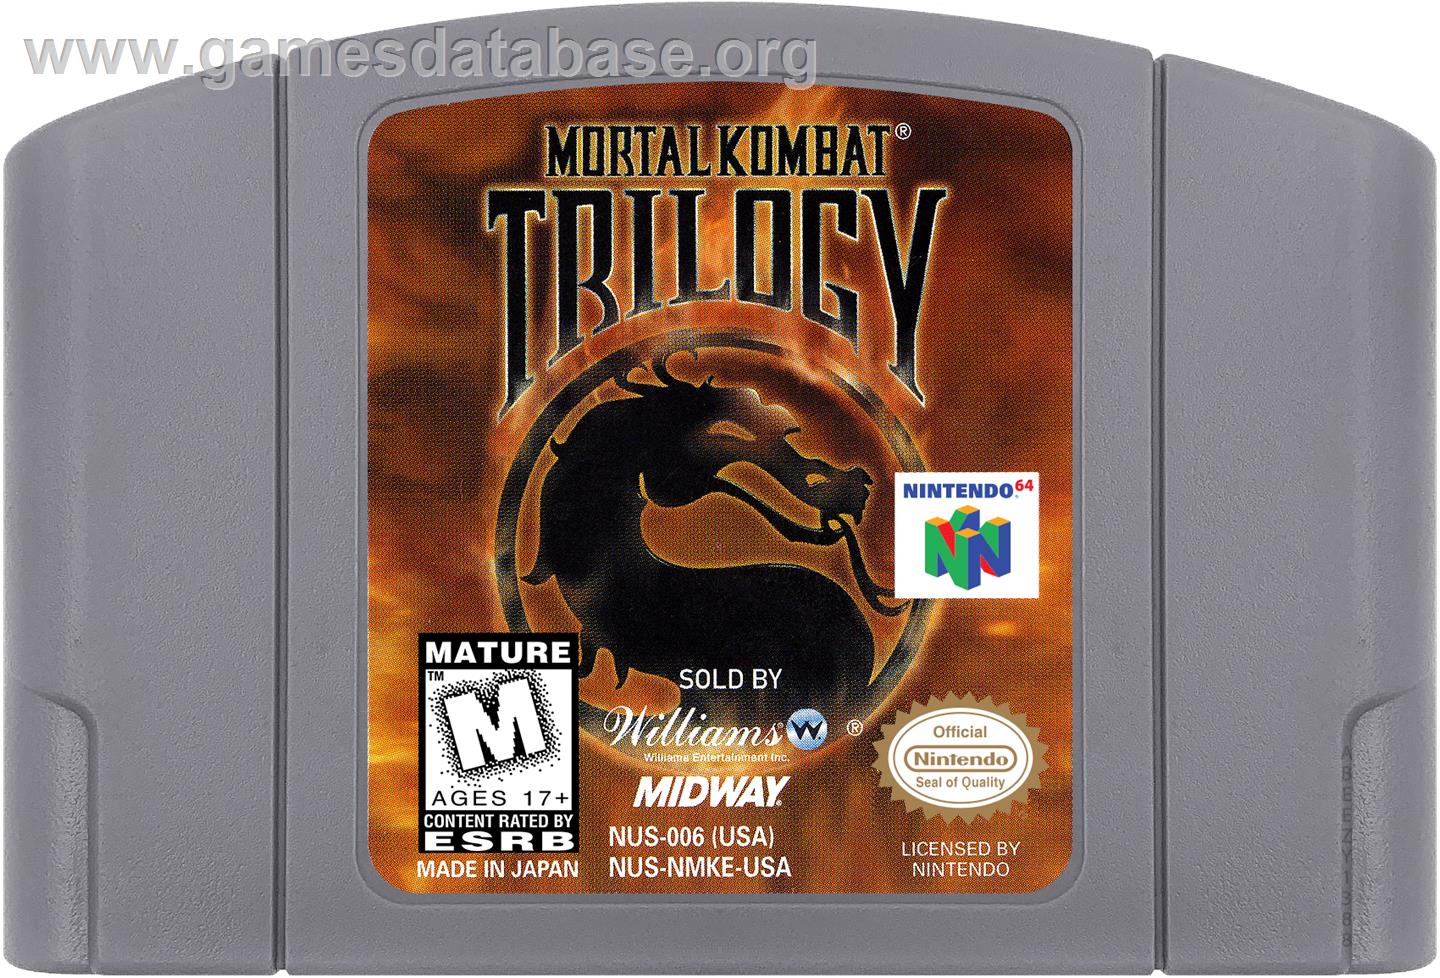 Mortal Kombat Trilogy - Nintendo N64 - Artwork - Cartridge